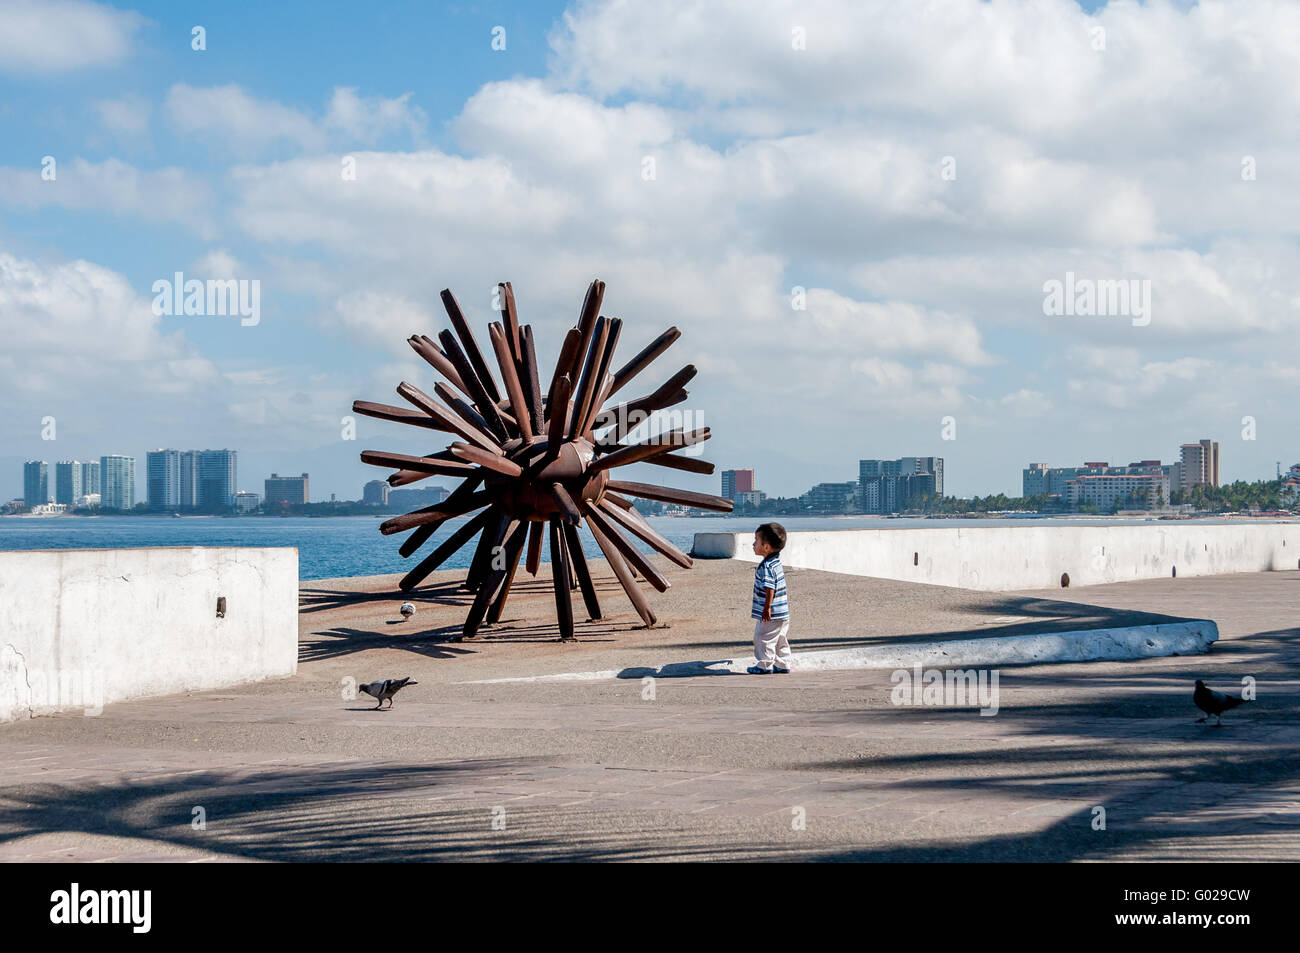 On the Puerto Vallarta malecon a small child contemplates Eriza-Dos, the iron sea urchin modern sculpture by artist Blu. Stock Photo